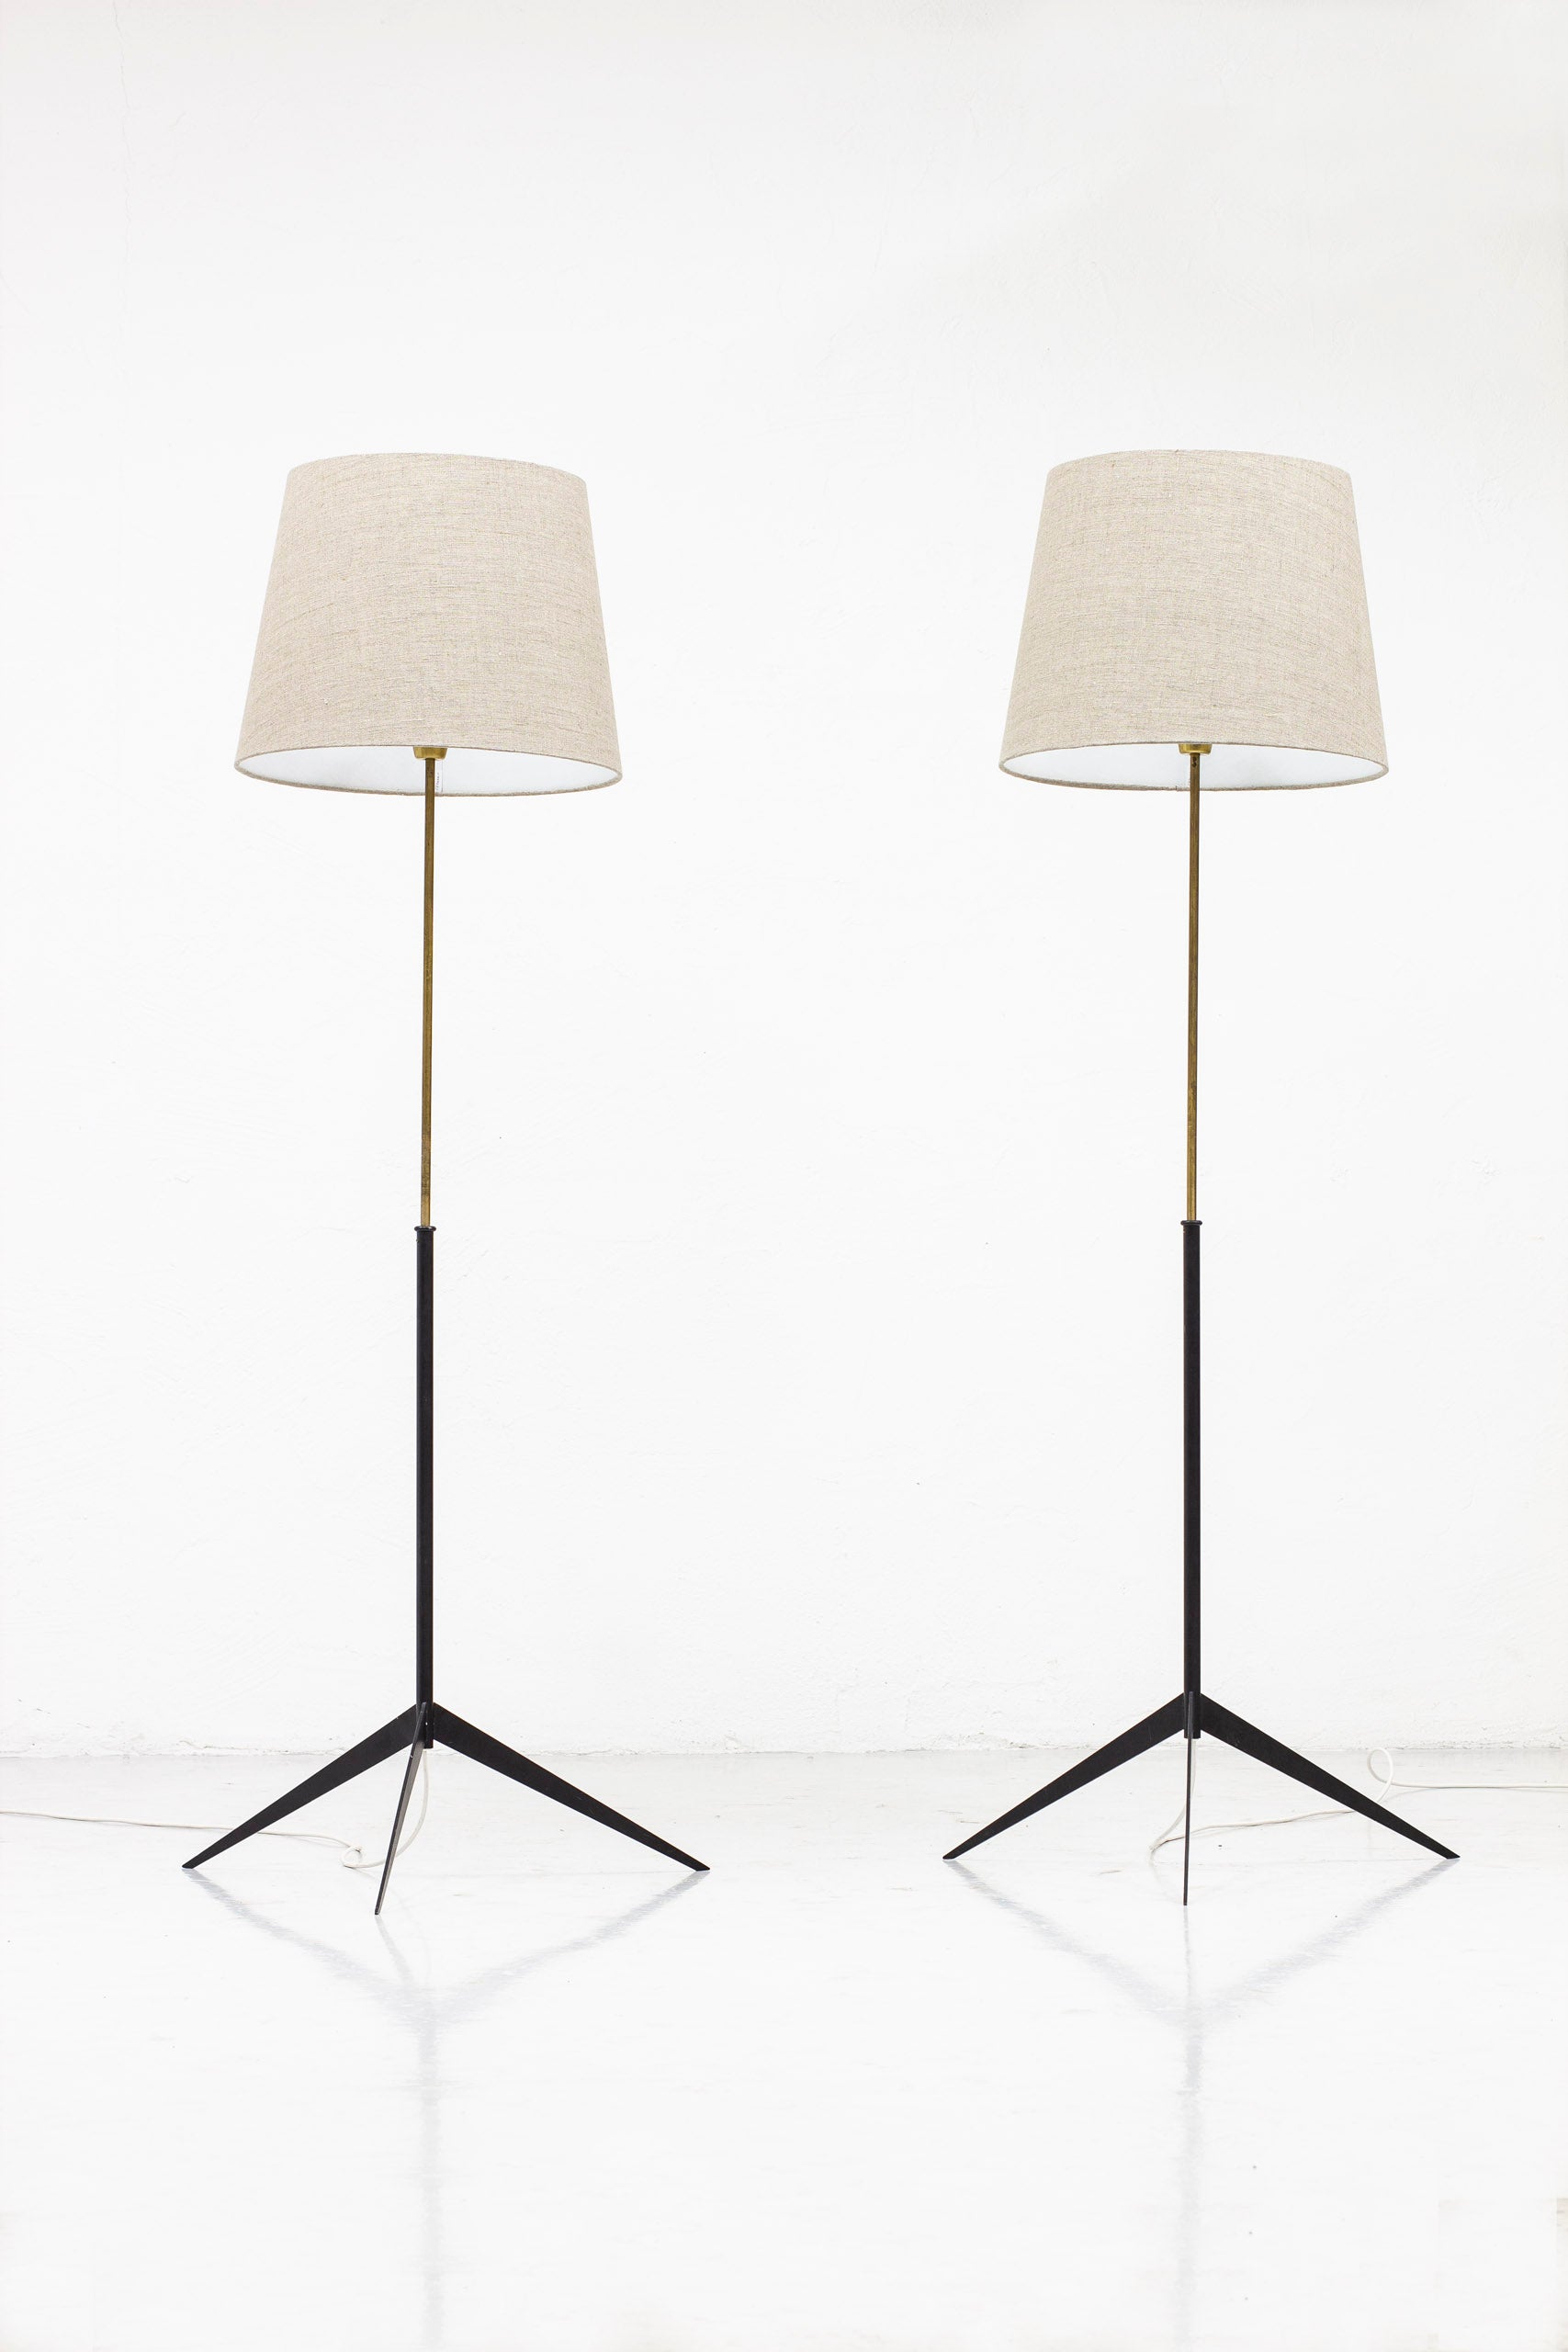 Floor lamps "G-30R" by Alf Svensson